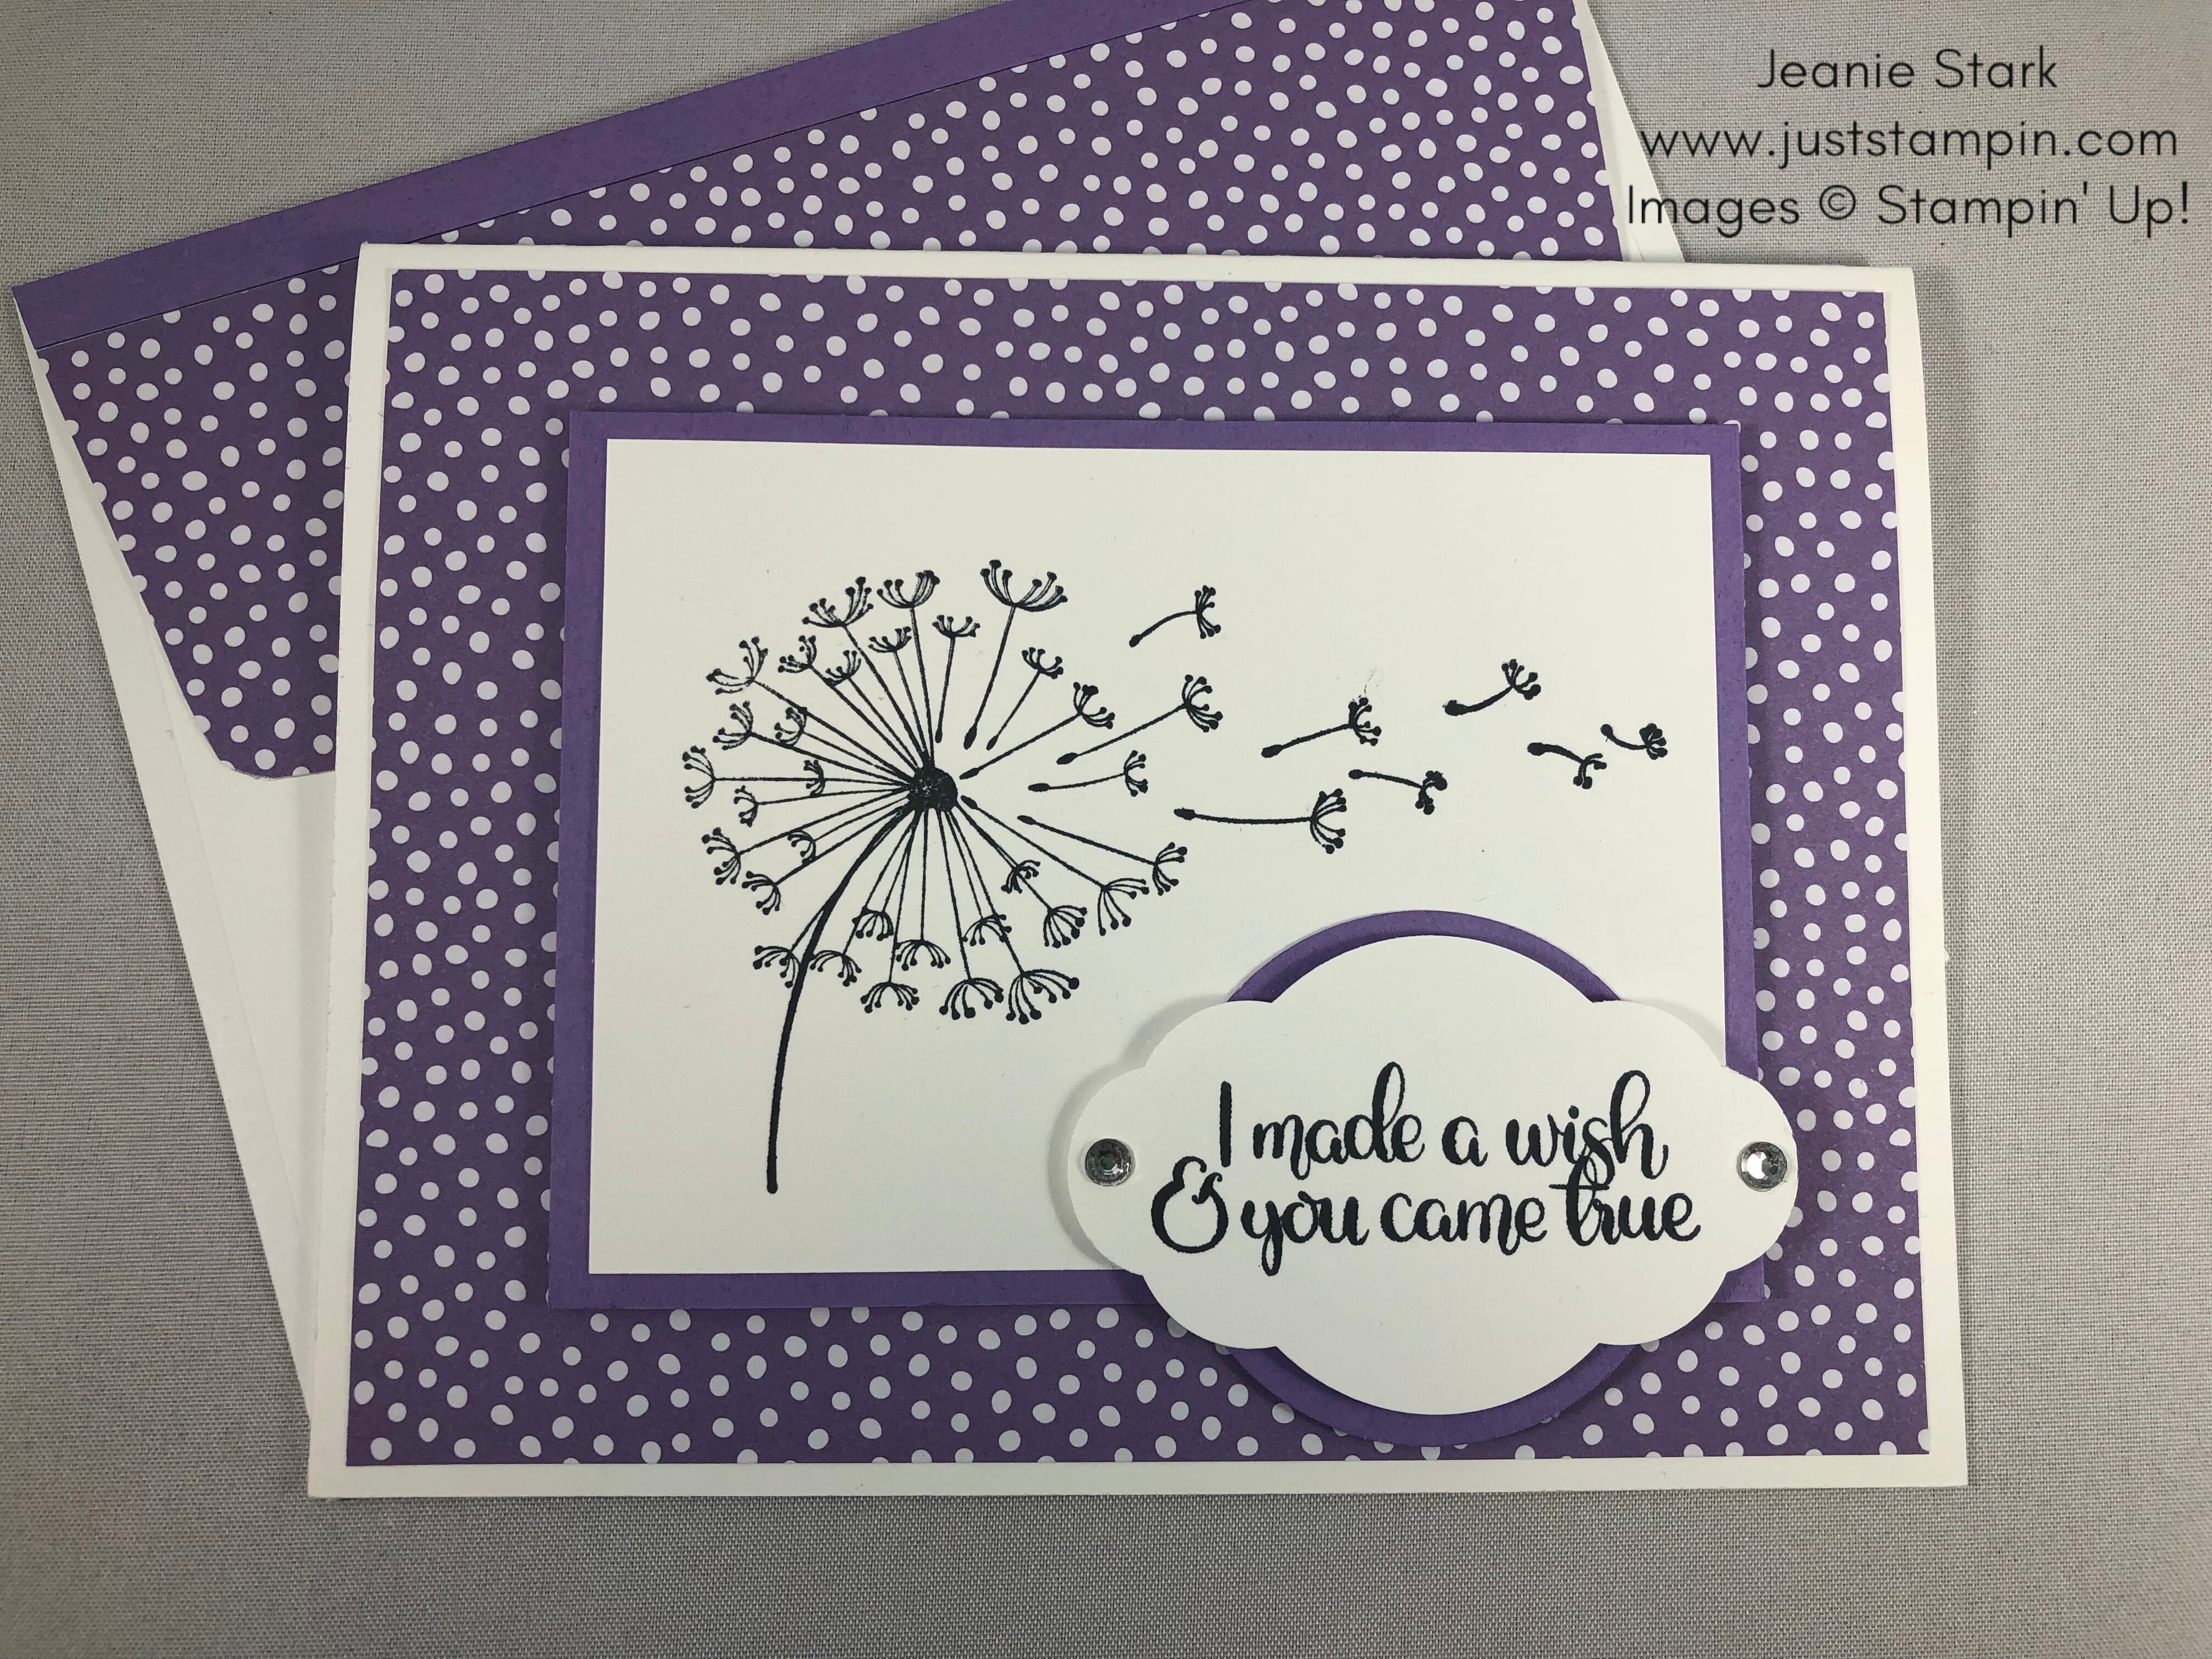 Stampin Up Dandelion Wishes birthday card idea - Jeanie Stark StampinUp